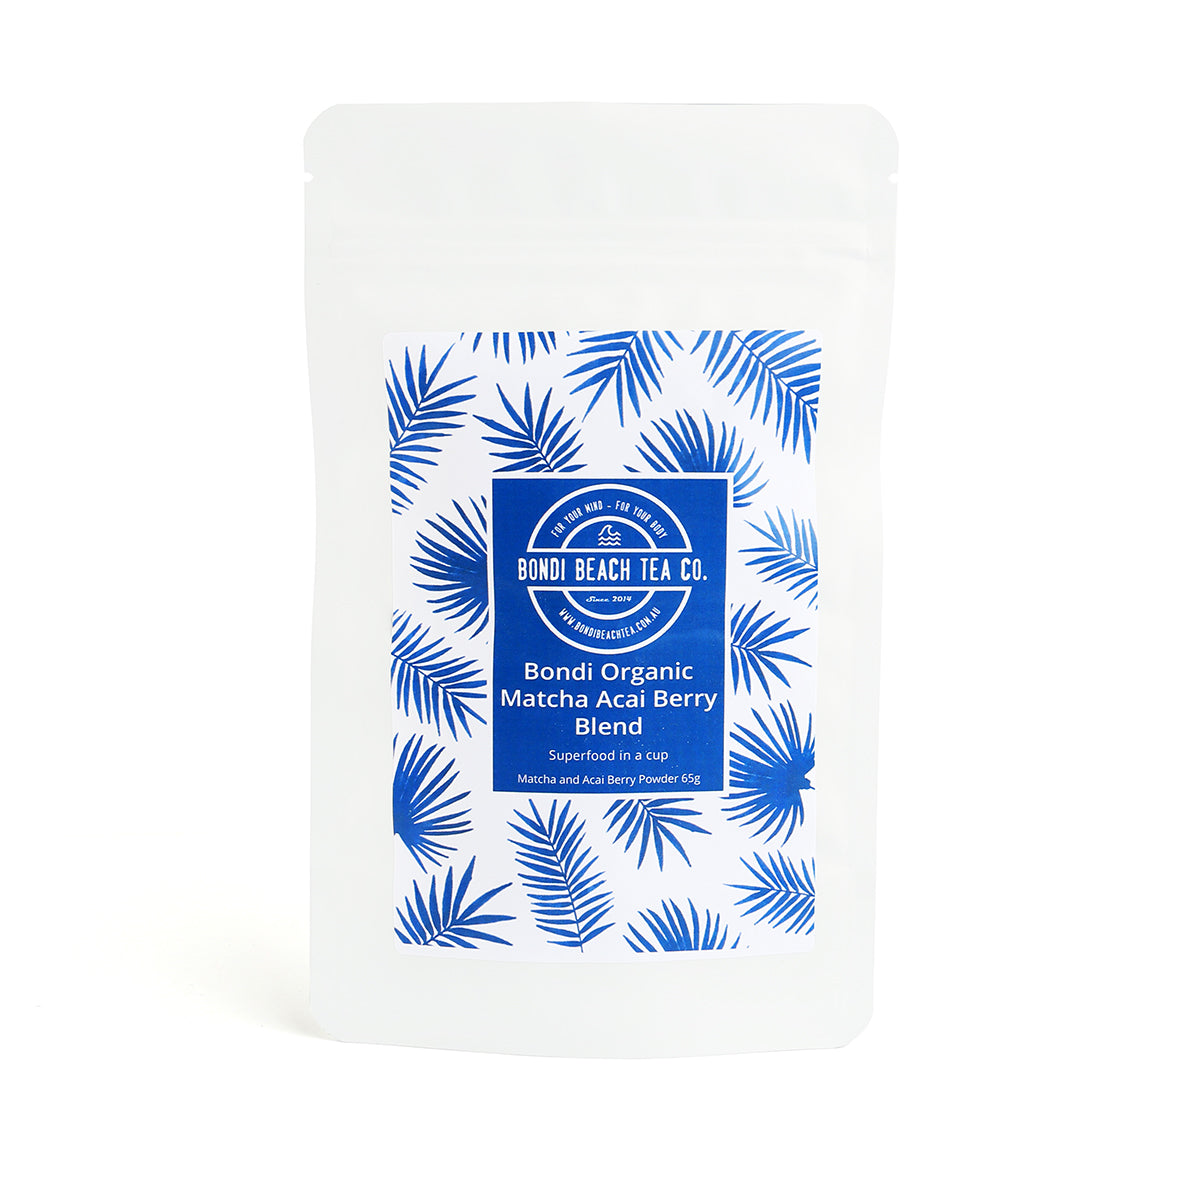 Bondi Organic Matcha Acai Berry Blend-Bondi Beach Tea Co